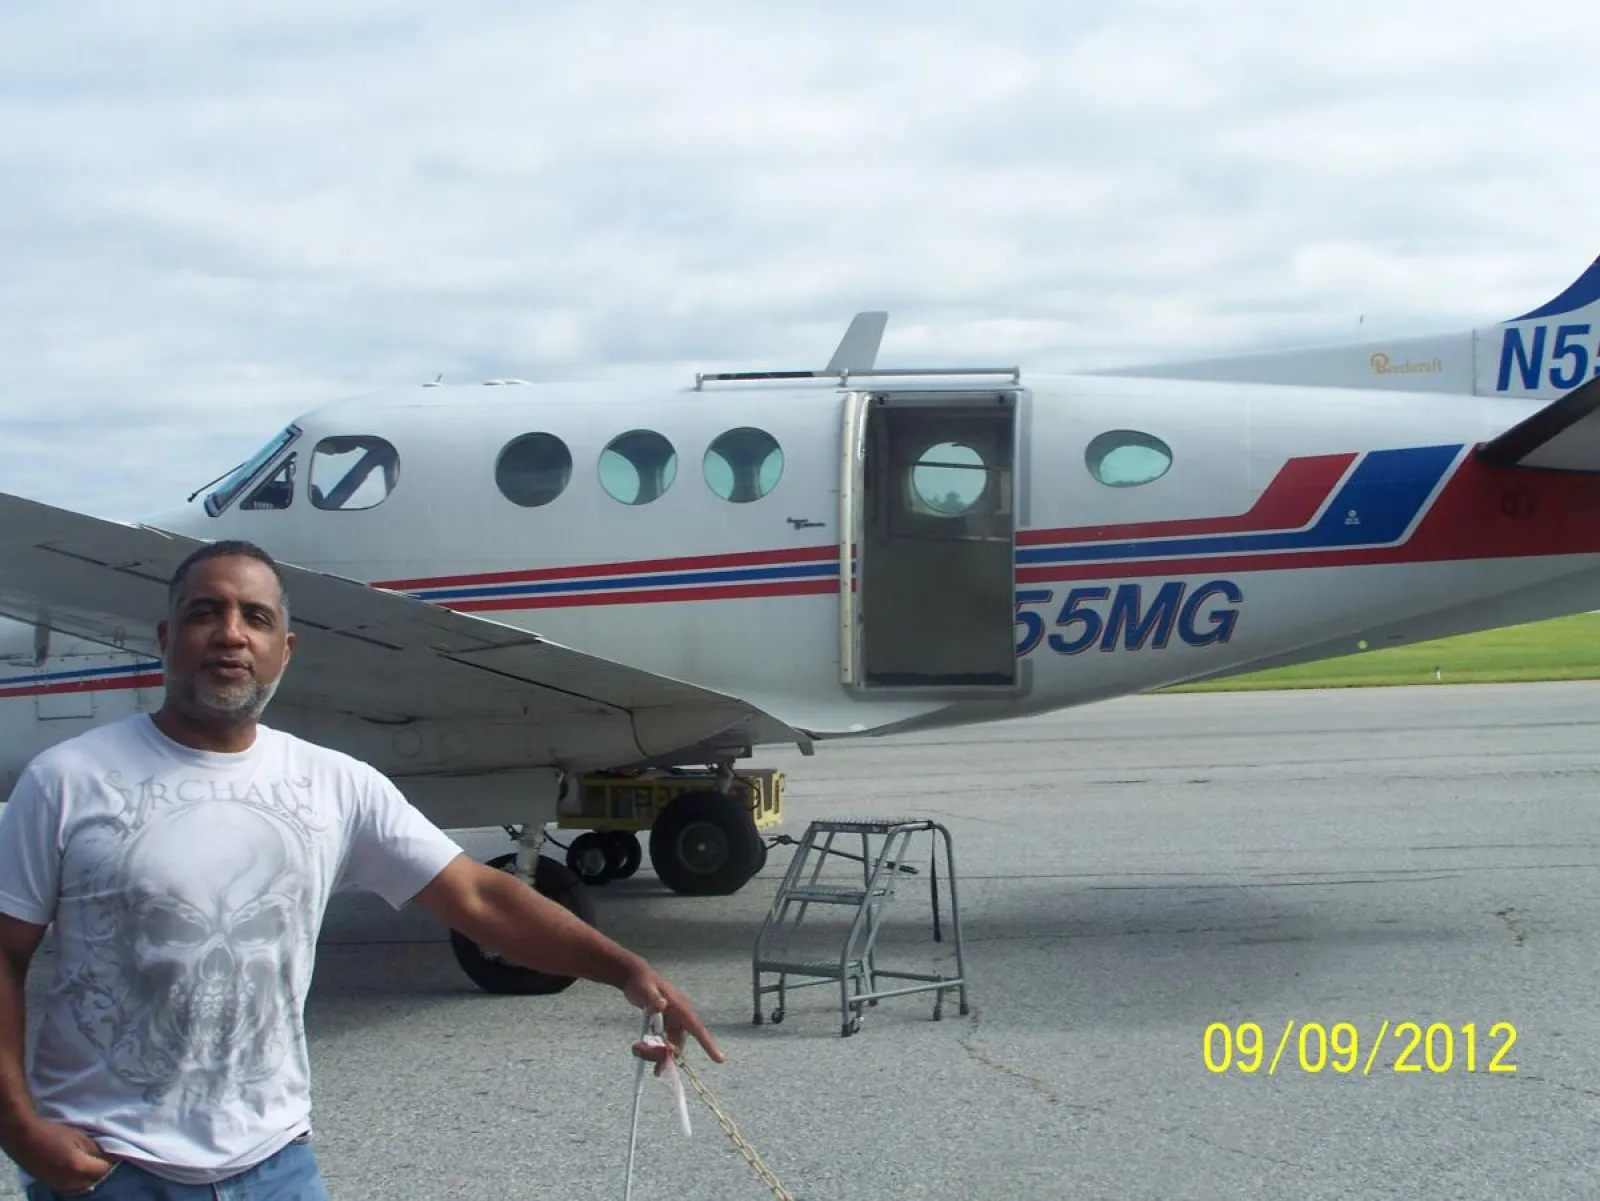 Martin standing next to a plane